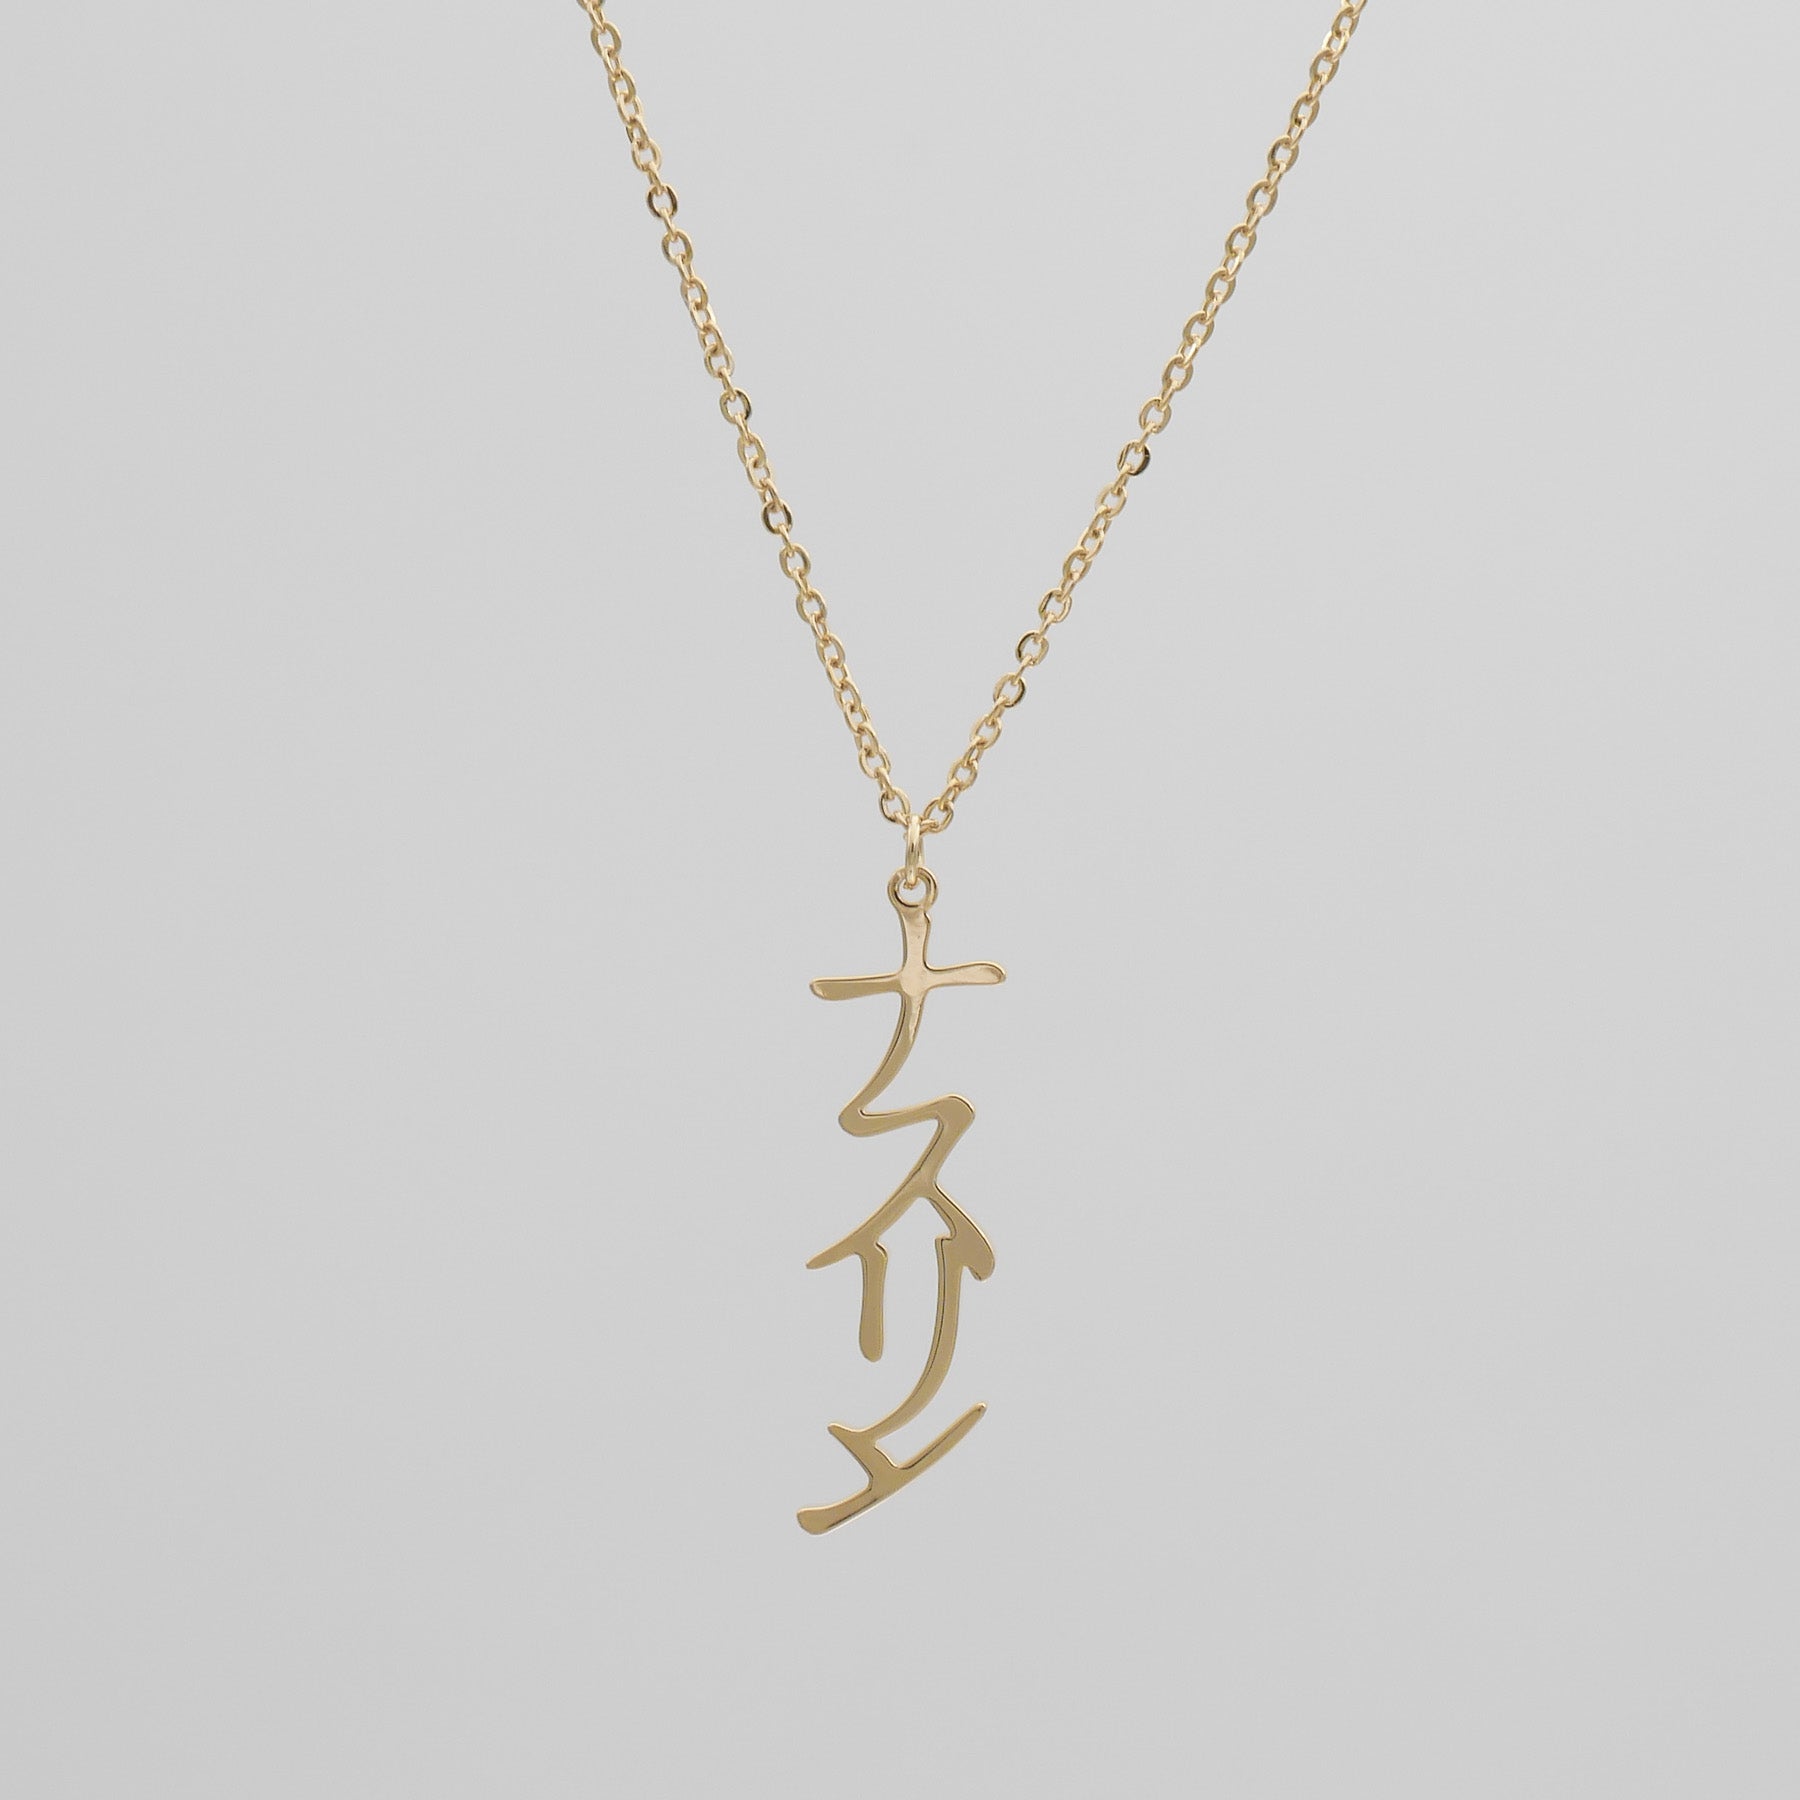 Japanese name necklace by PRYA UK